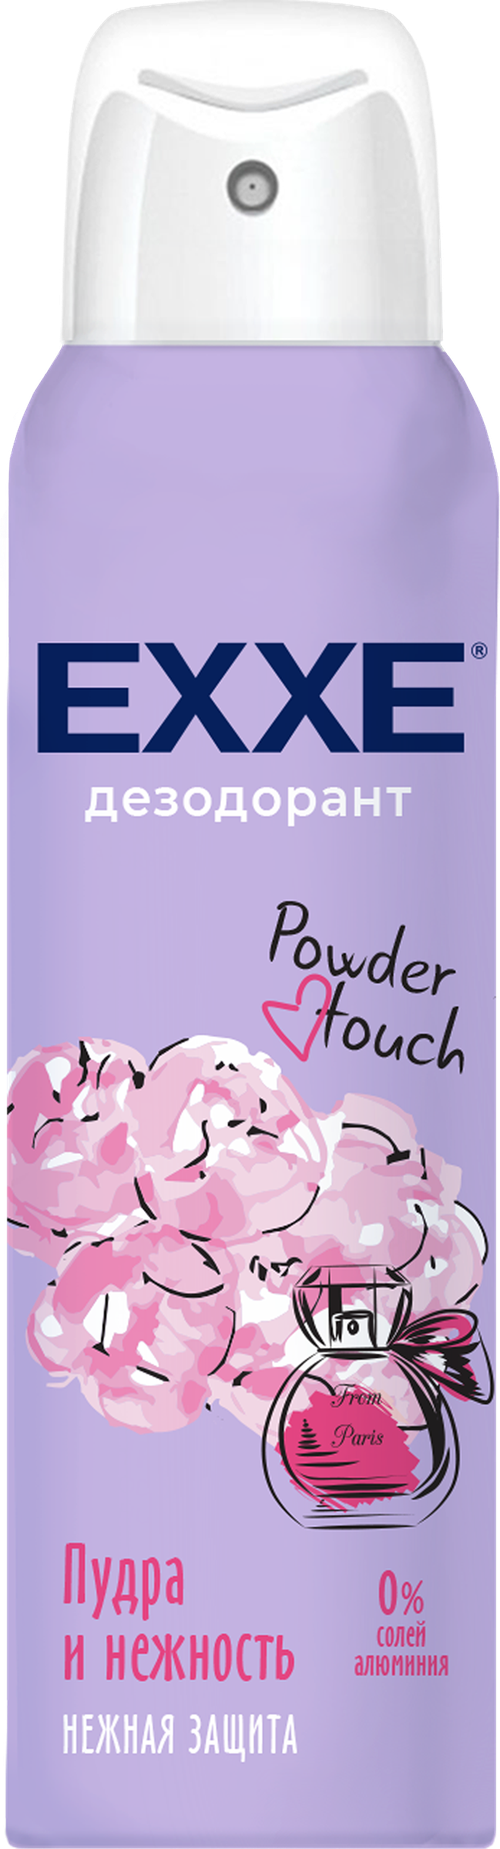 EXXE Дезодорант женский антиперспирант (спрей) Пудра и нежность Powder touch, 150 мл